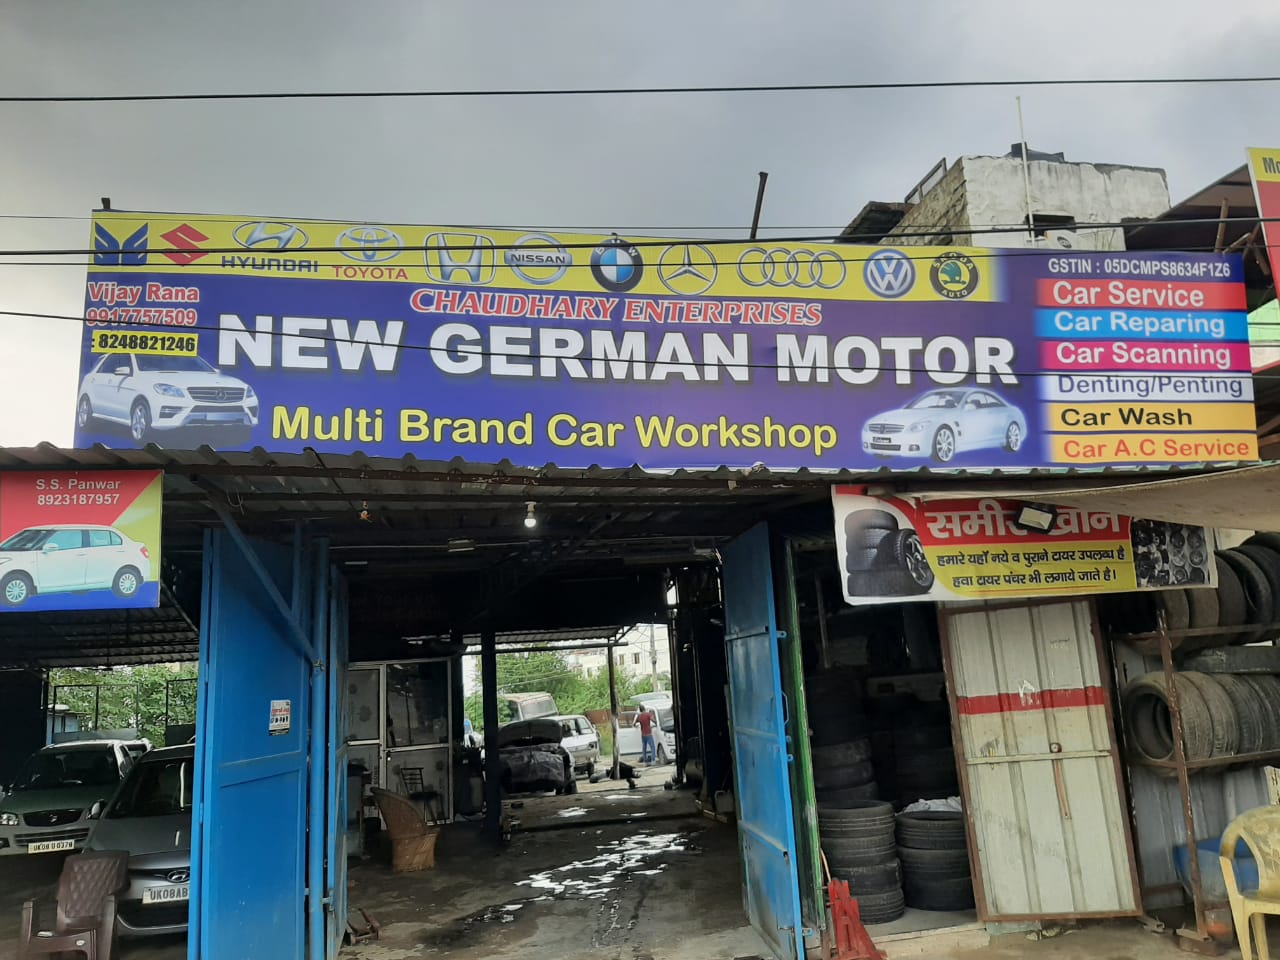 New German motor multi brand car workshop